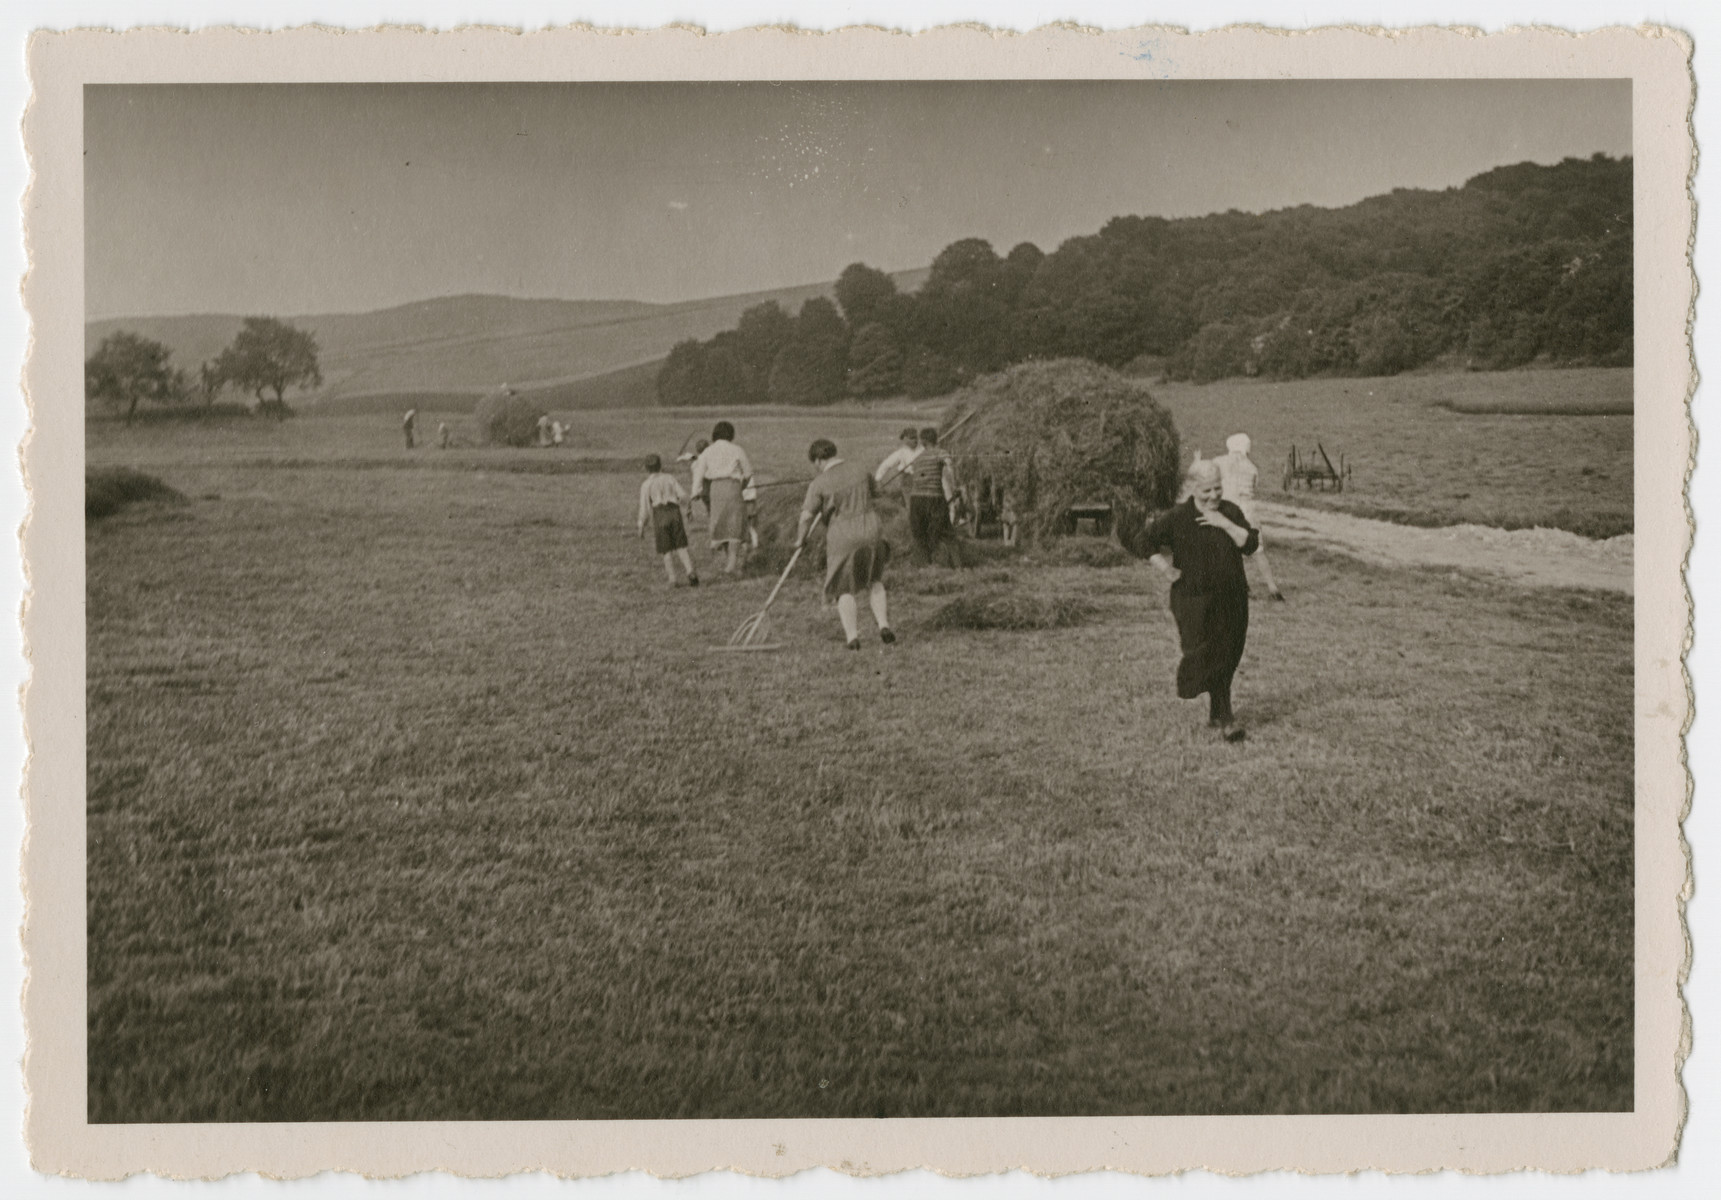 Photograph of extended Isenberg family harvesting hay. 

Pictured are: Erna Isenberg (in skirt), Rosa Isenberg (raking), Julie Isenberg (foreground, black dress), and Sigmund Isenberg (with cap next to hay cart).